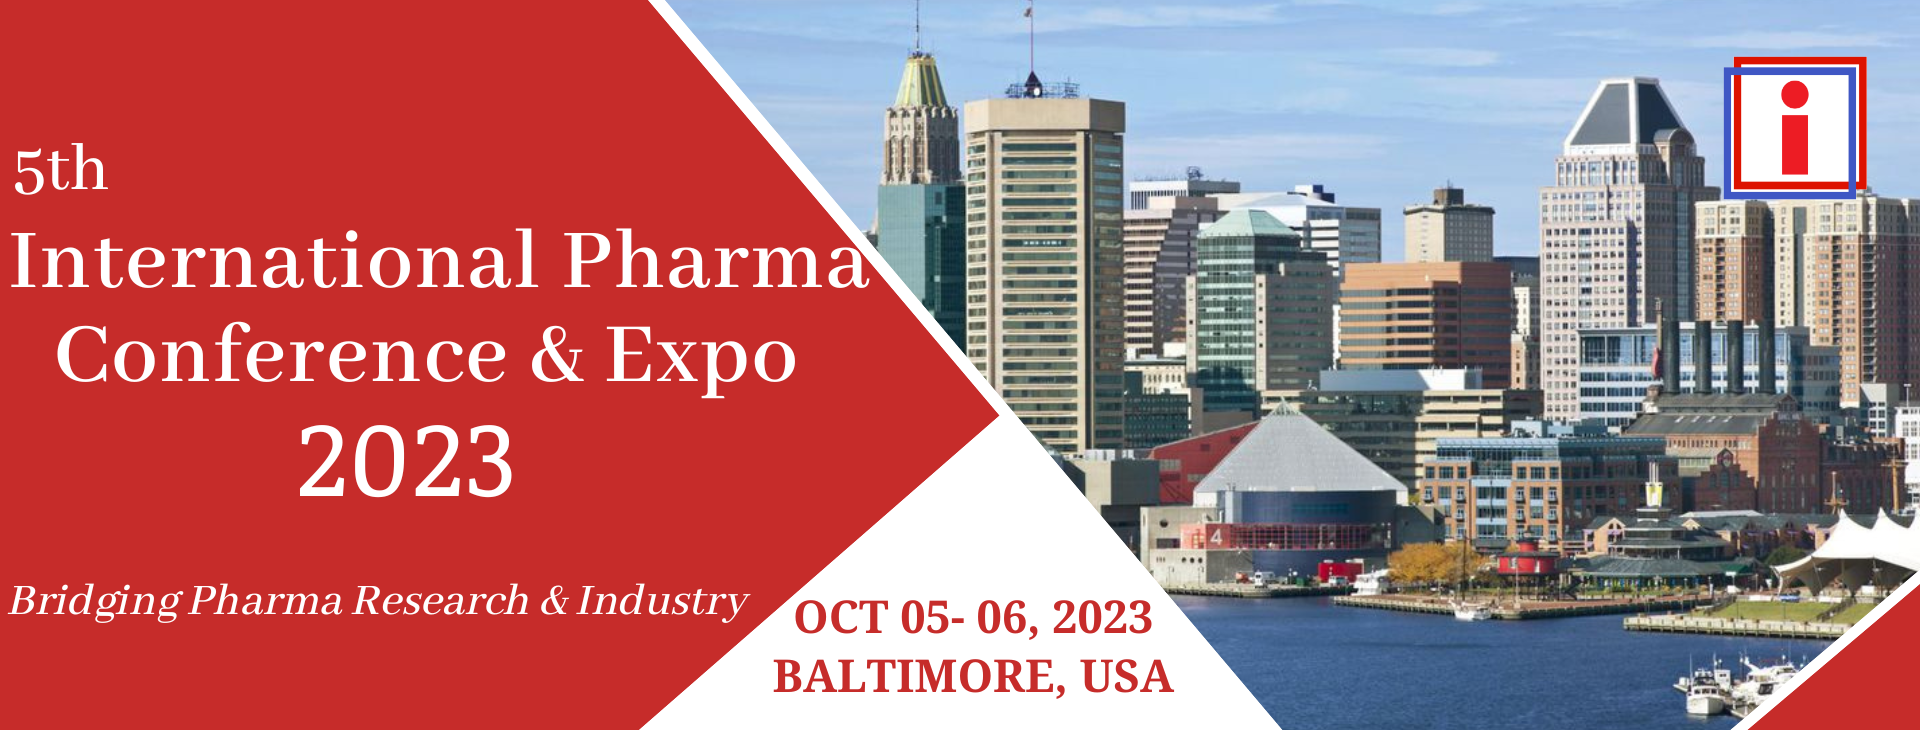 i Pharma Boston image banner